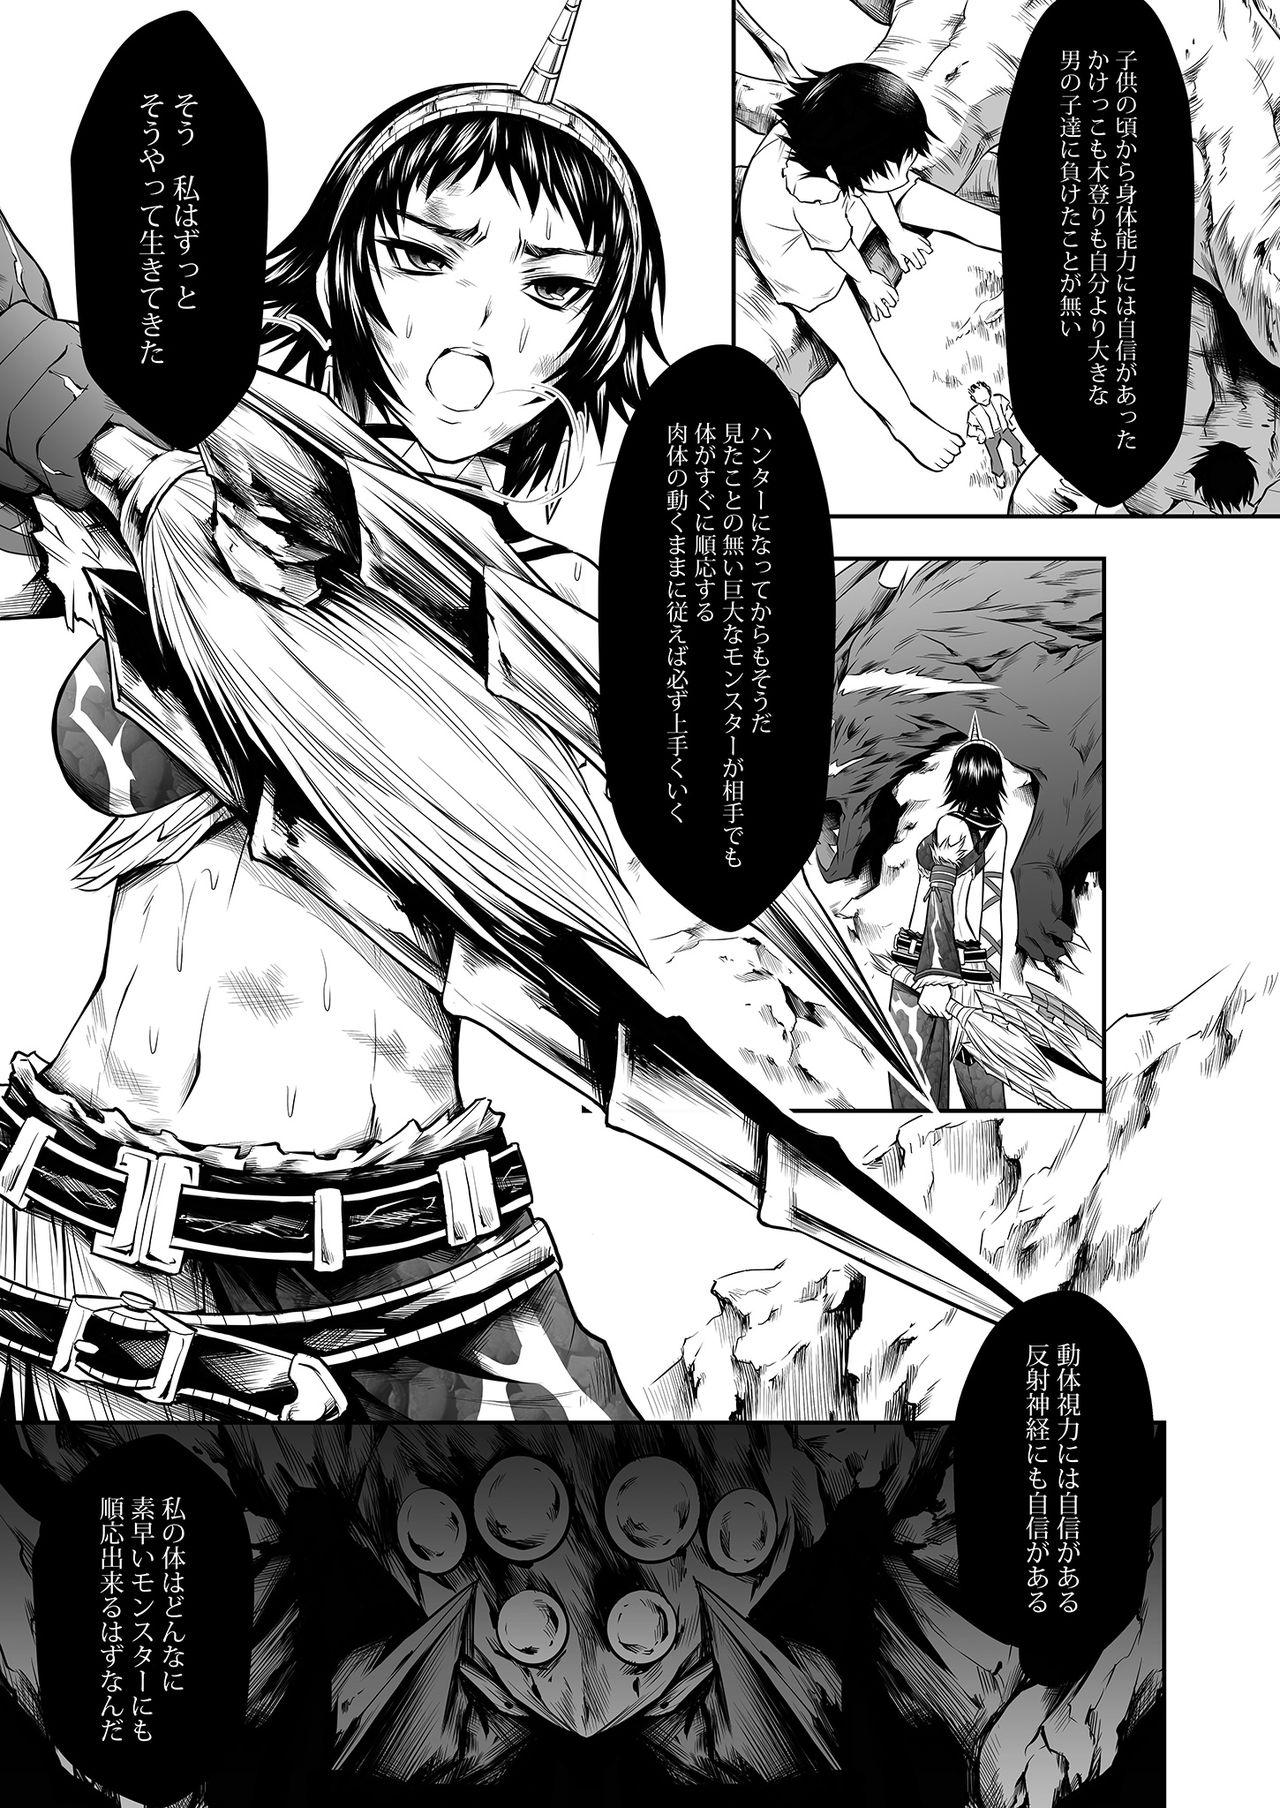 Sharing Pair Hunter no Seitai vol.2-2 - Monster hunter Travesti - Page 5